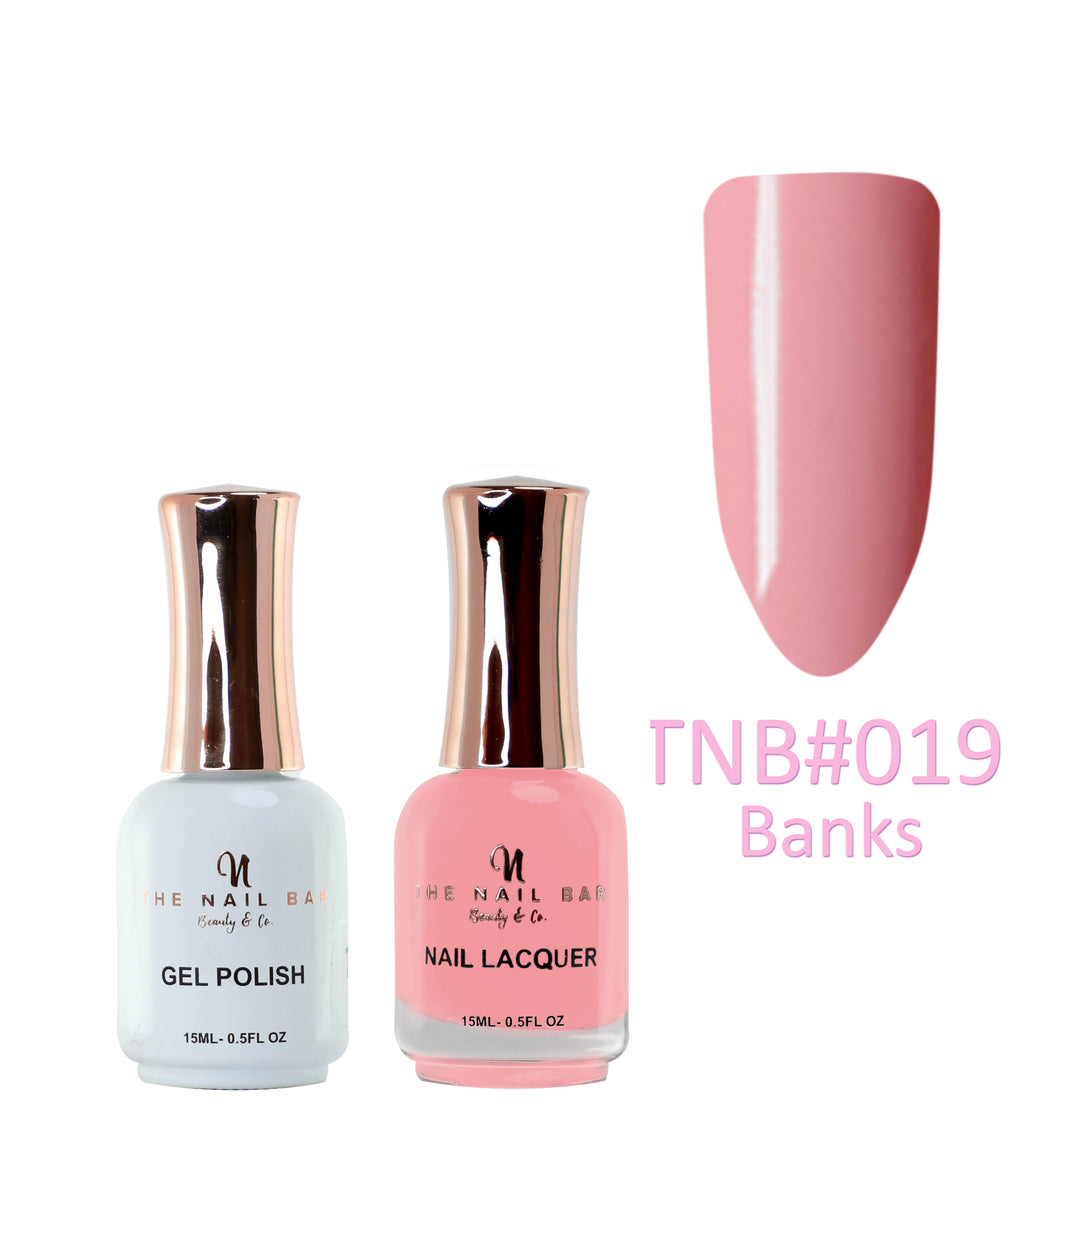 Dual Polish/Gel colour matching (15ml) - Banks - The Nail Bar Beauty & Co.